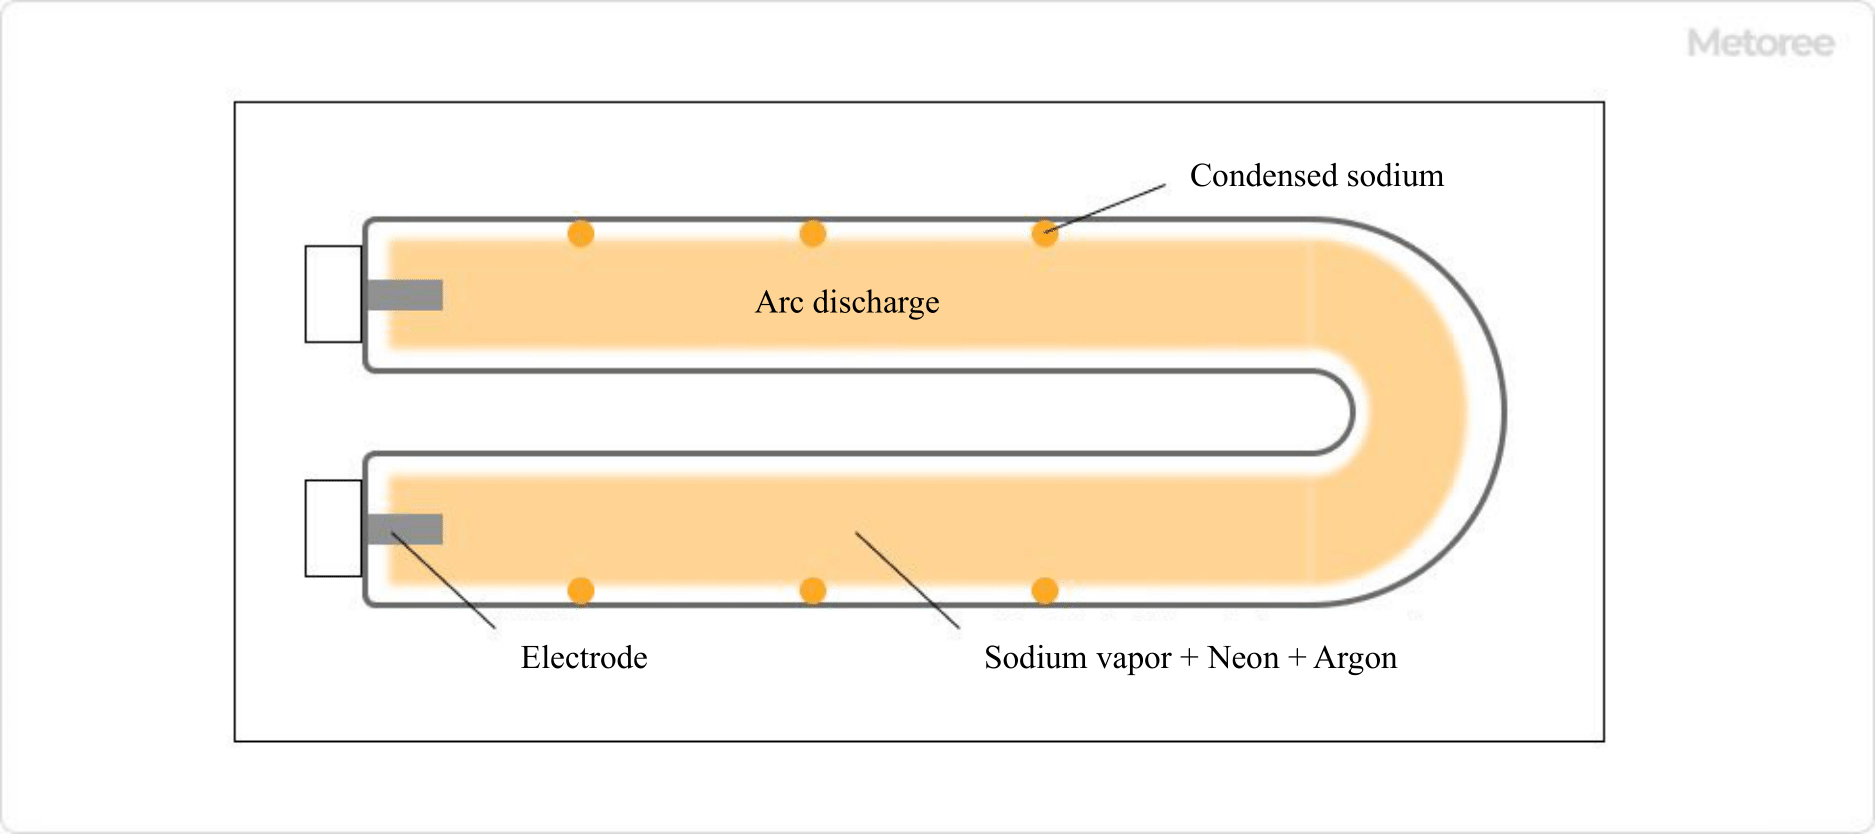 Figure 2. Structure of a low-pressure sodium lamp